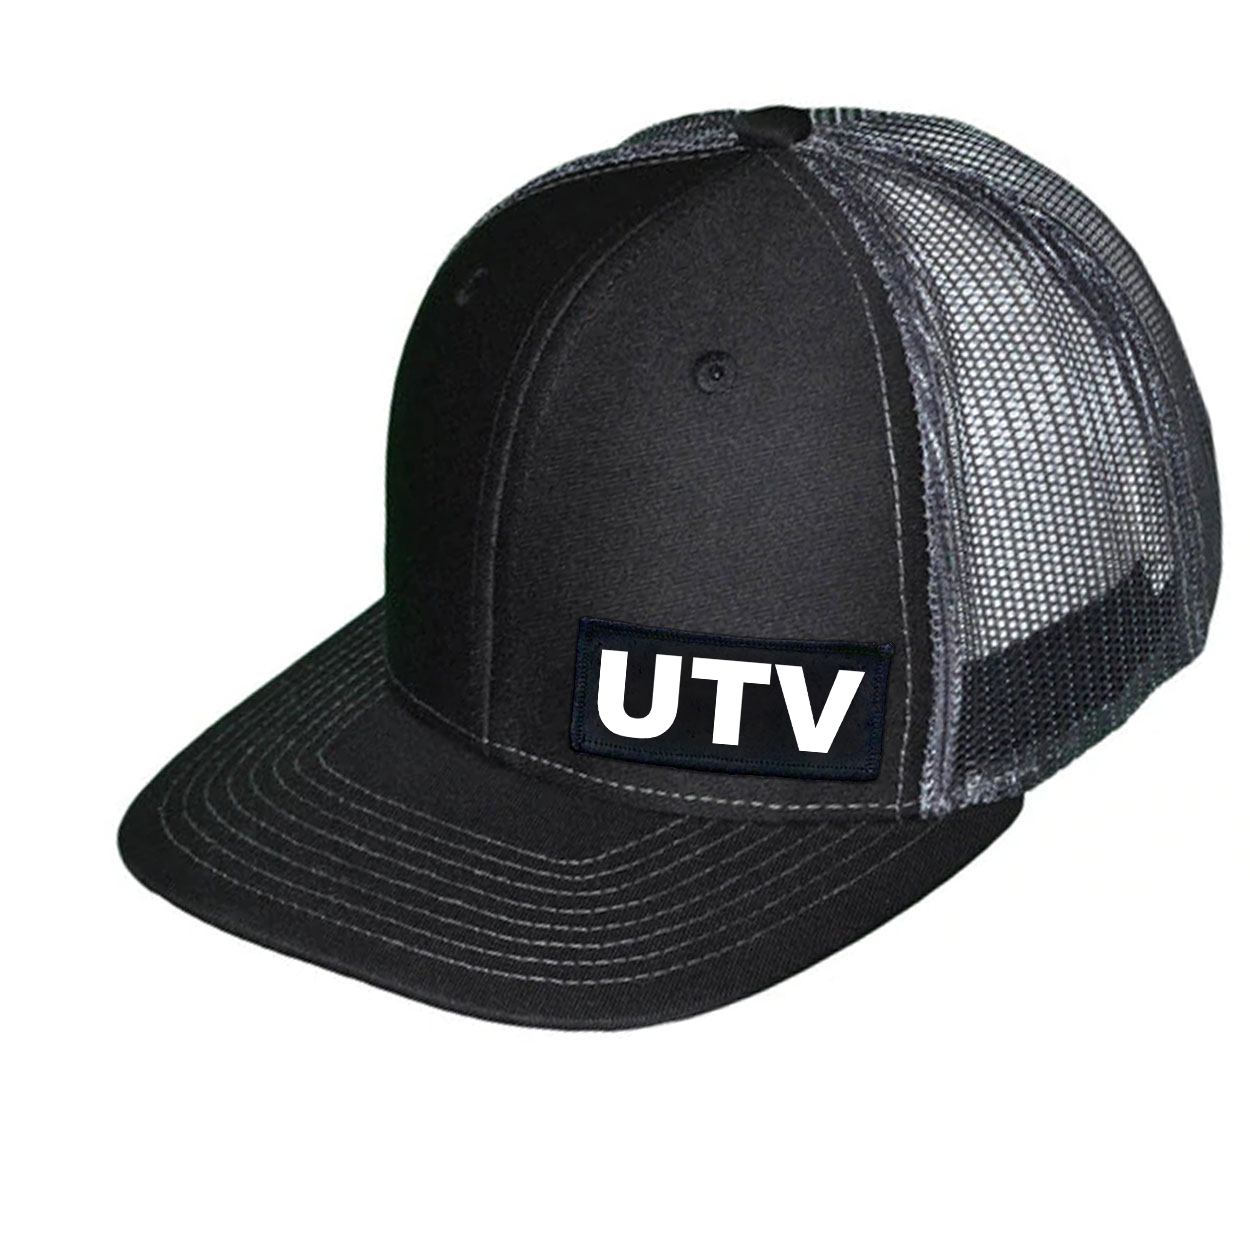 Utv Brand Logo Night Out Woven Patch Snapback Trucker Hat Black/Gray